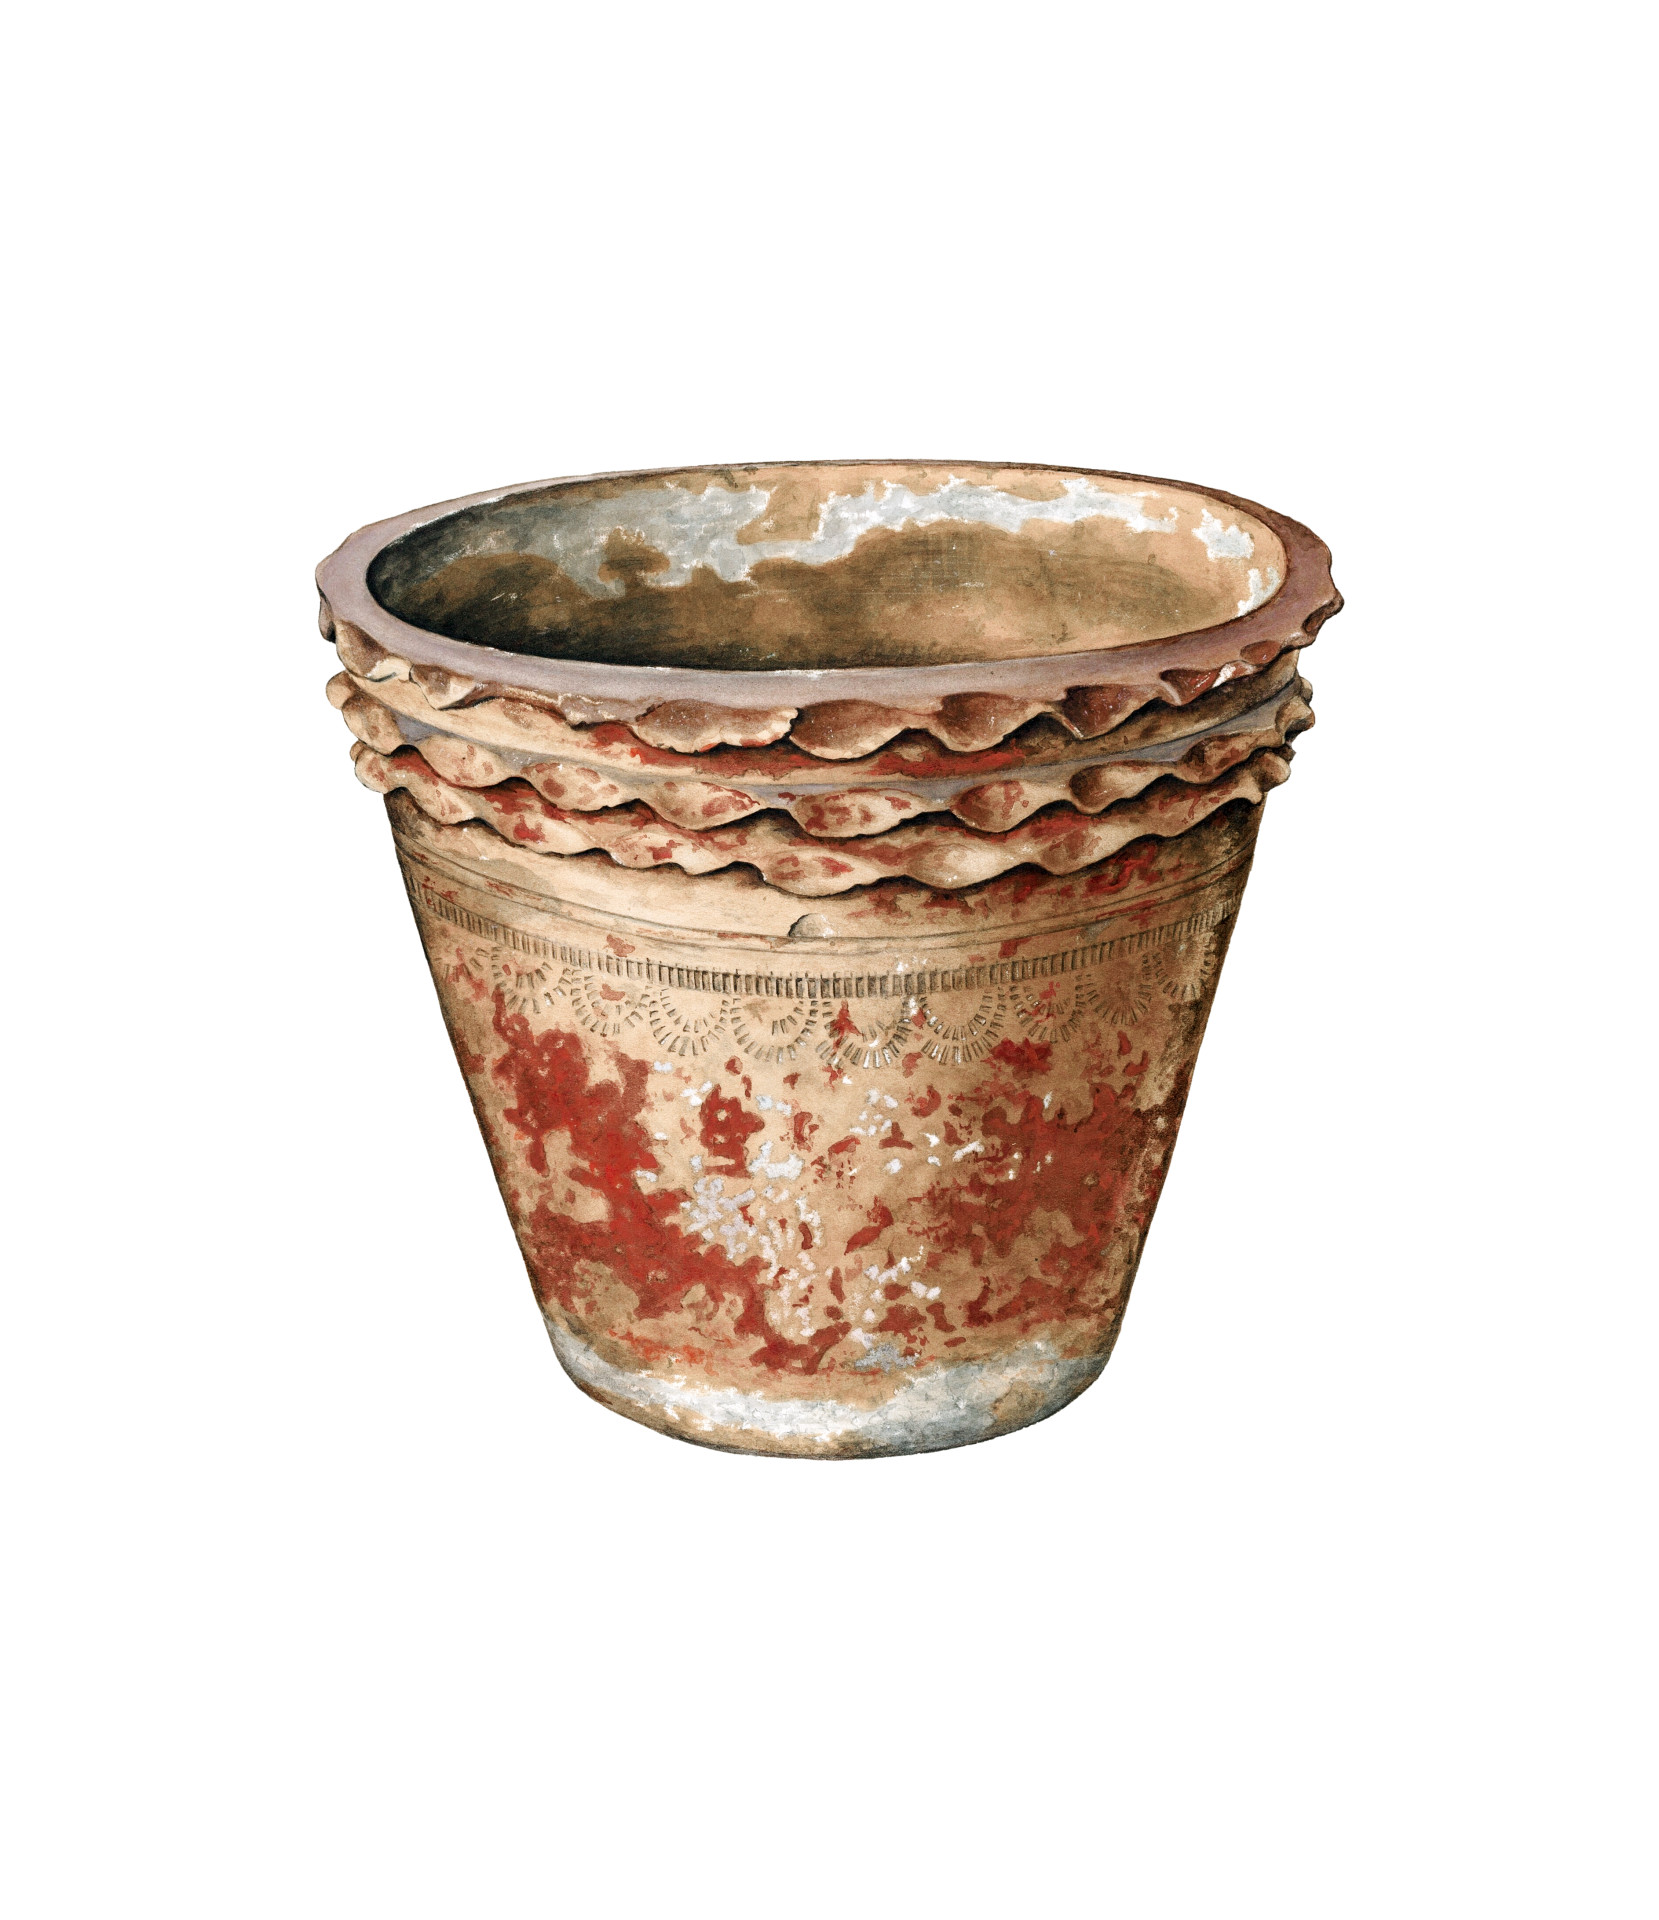 Flowerpot Clay Pot Pot Ceramic Vintage Clipart Sticker Painted With Transparent Background Illustration Illustration